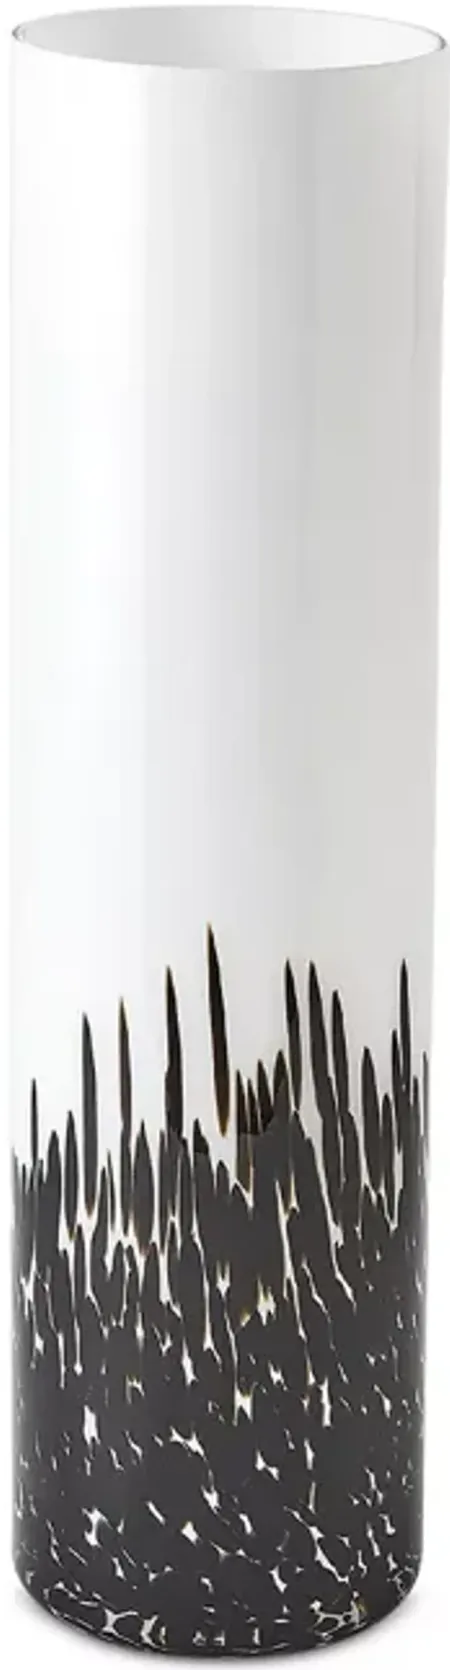 Global Views Confetti Vase in Black/White, Medium